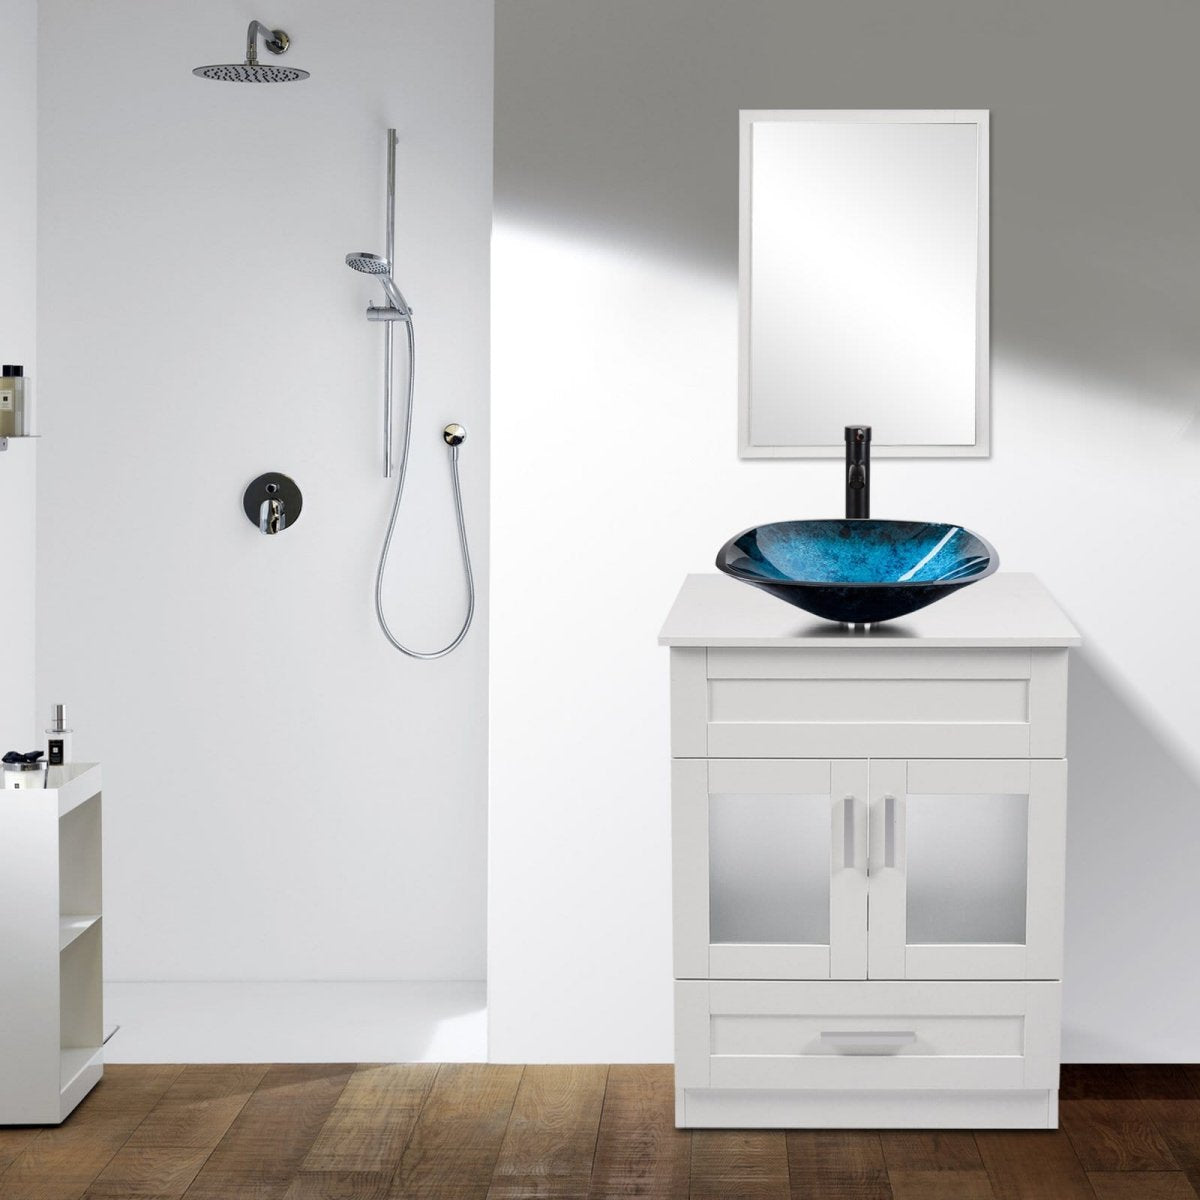 Elecwish White Bathroom Vanity with Blue Square Sink Set BA1001-WH display scene